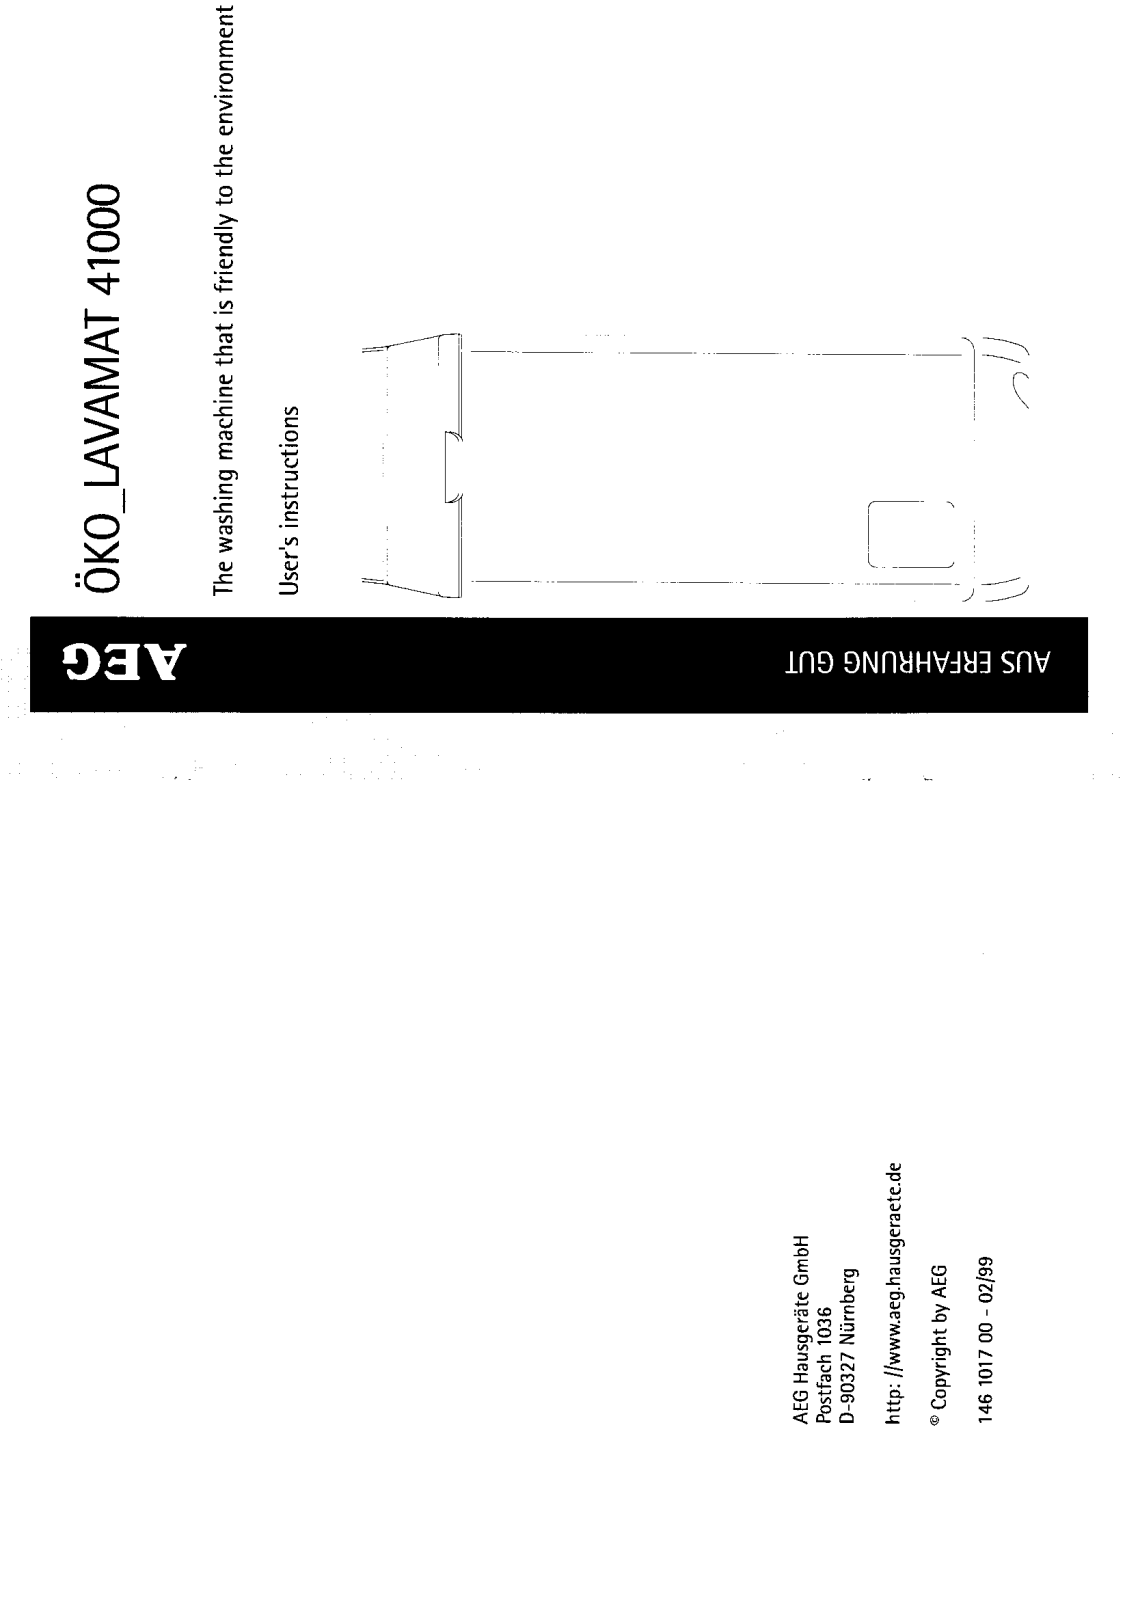 AEG LAV40900 Manual